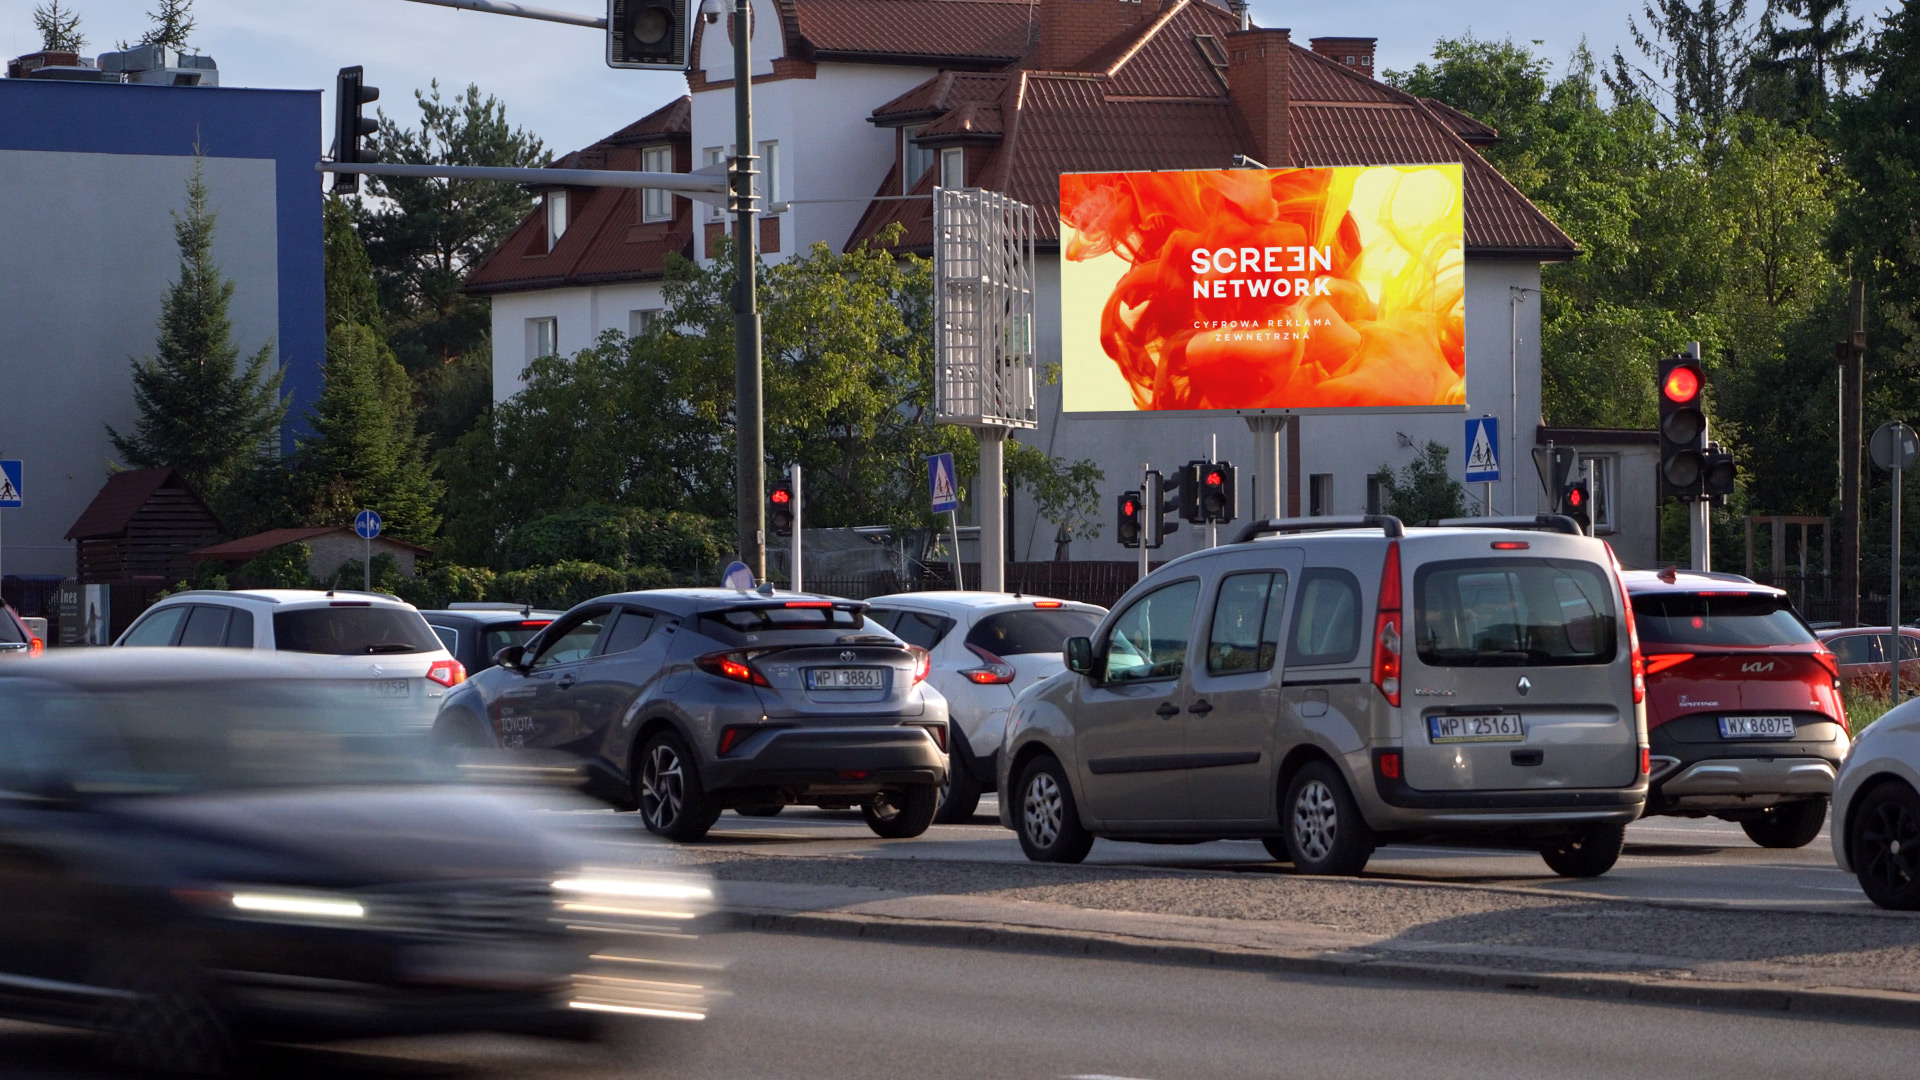 Reklama-Warszawa-ekran-Puławska-482-kierunek-Piaseczno Screen Network